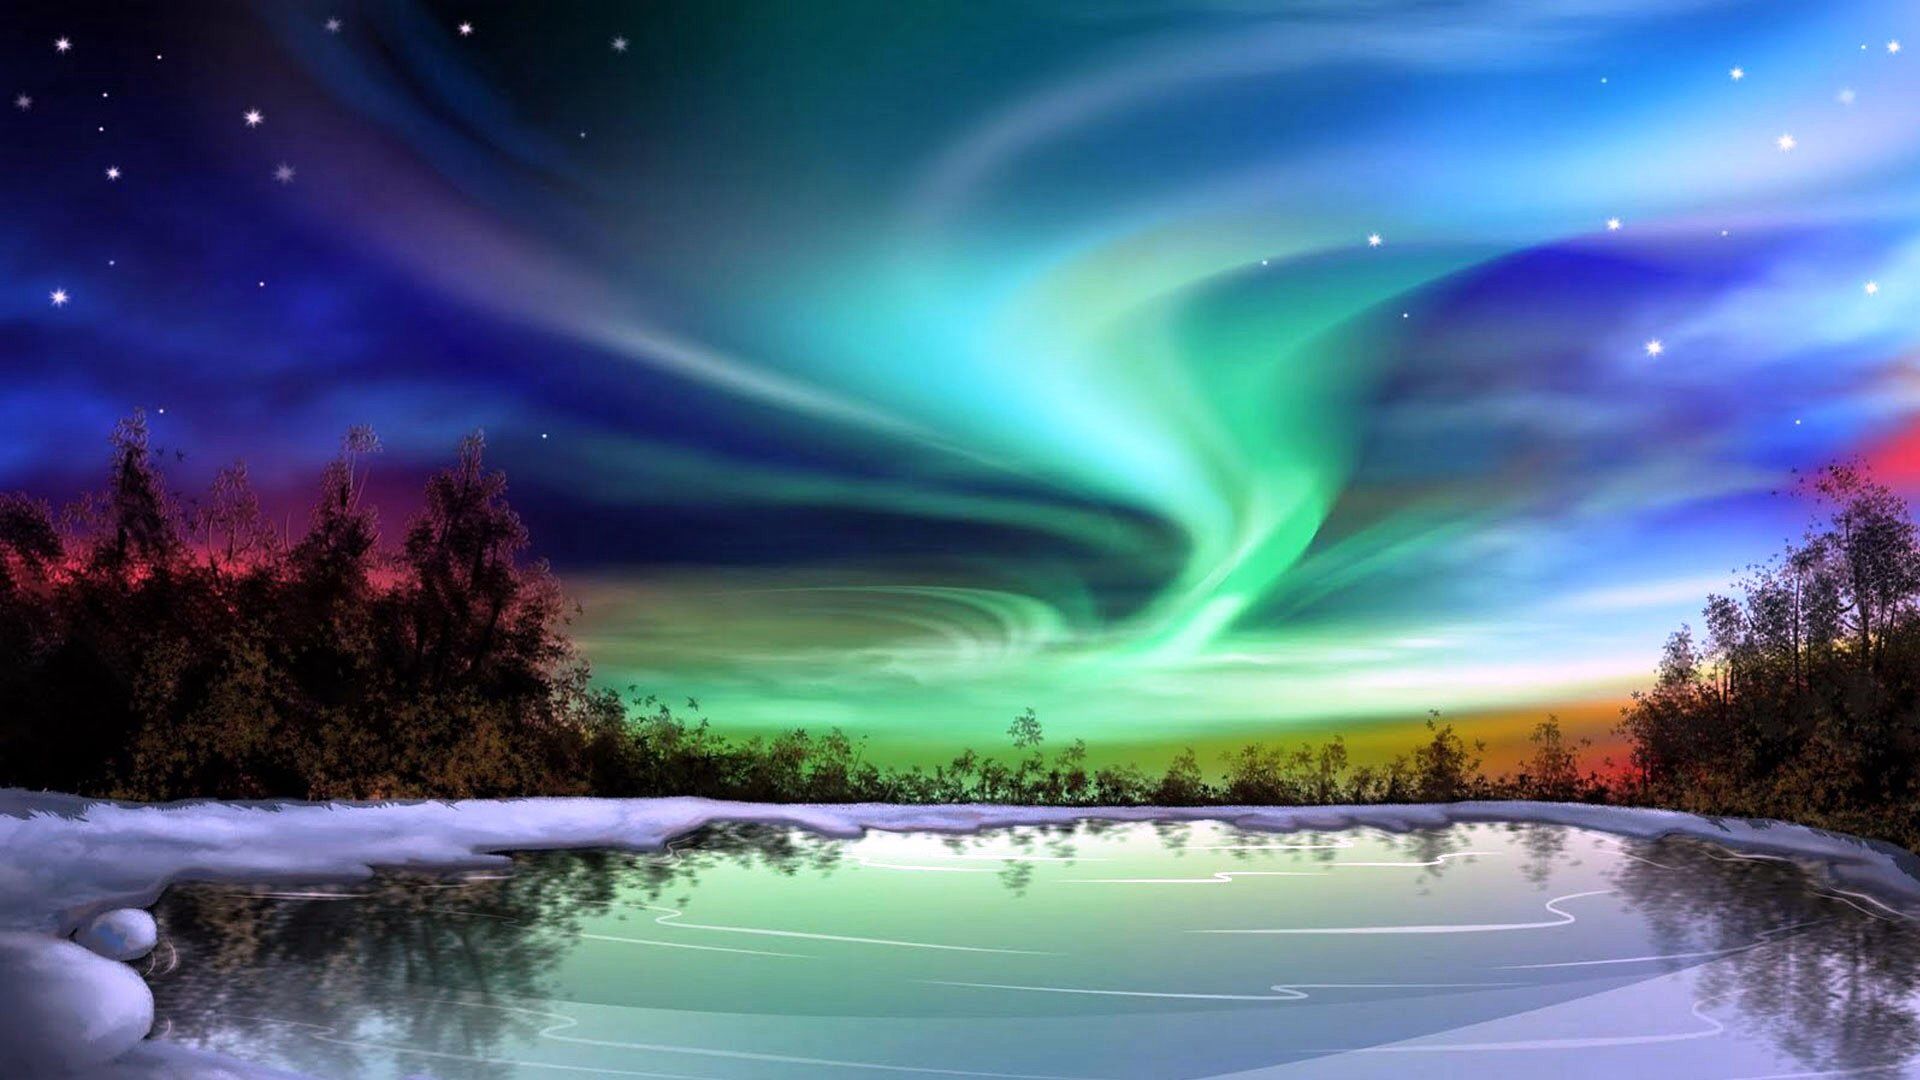 Free download Aurora borealis image Northern lights aurora